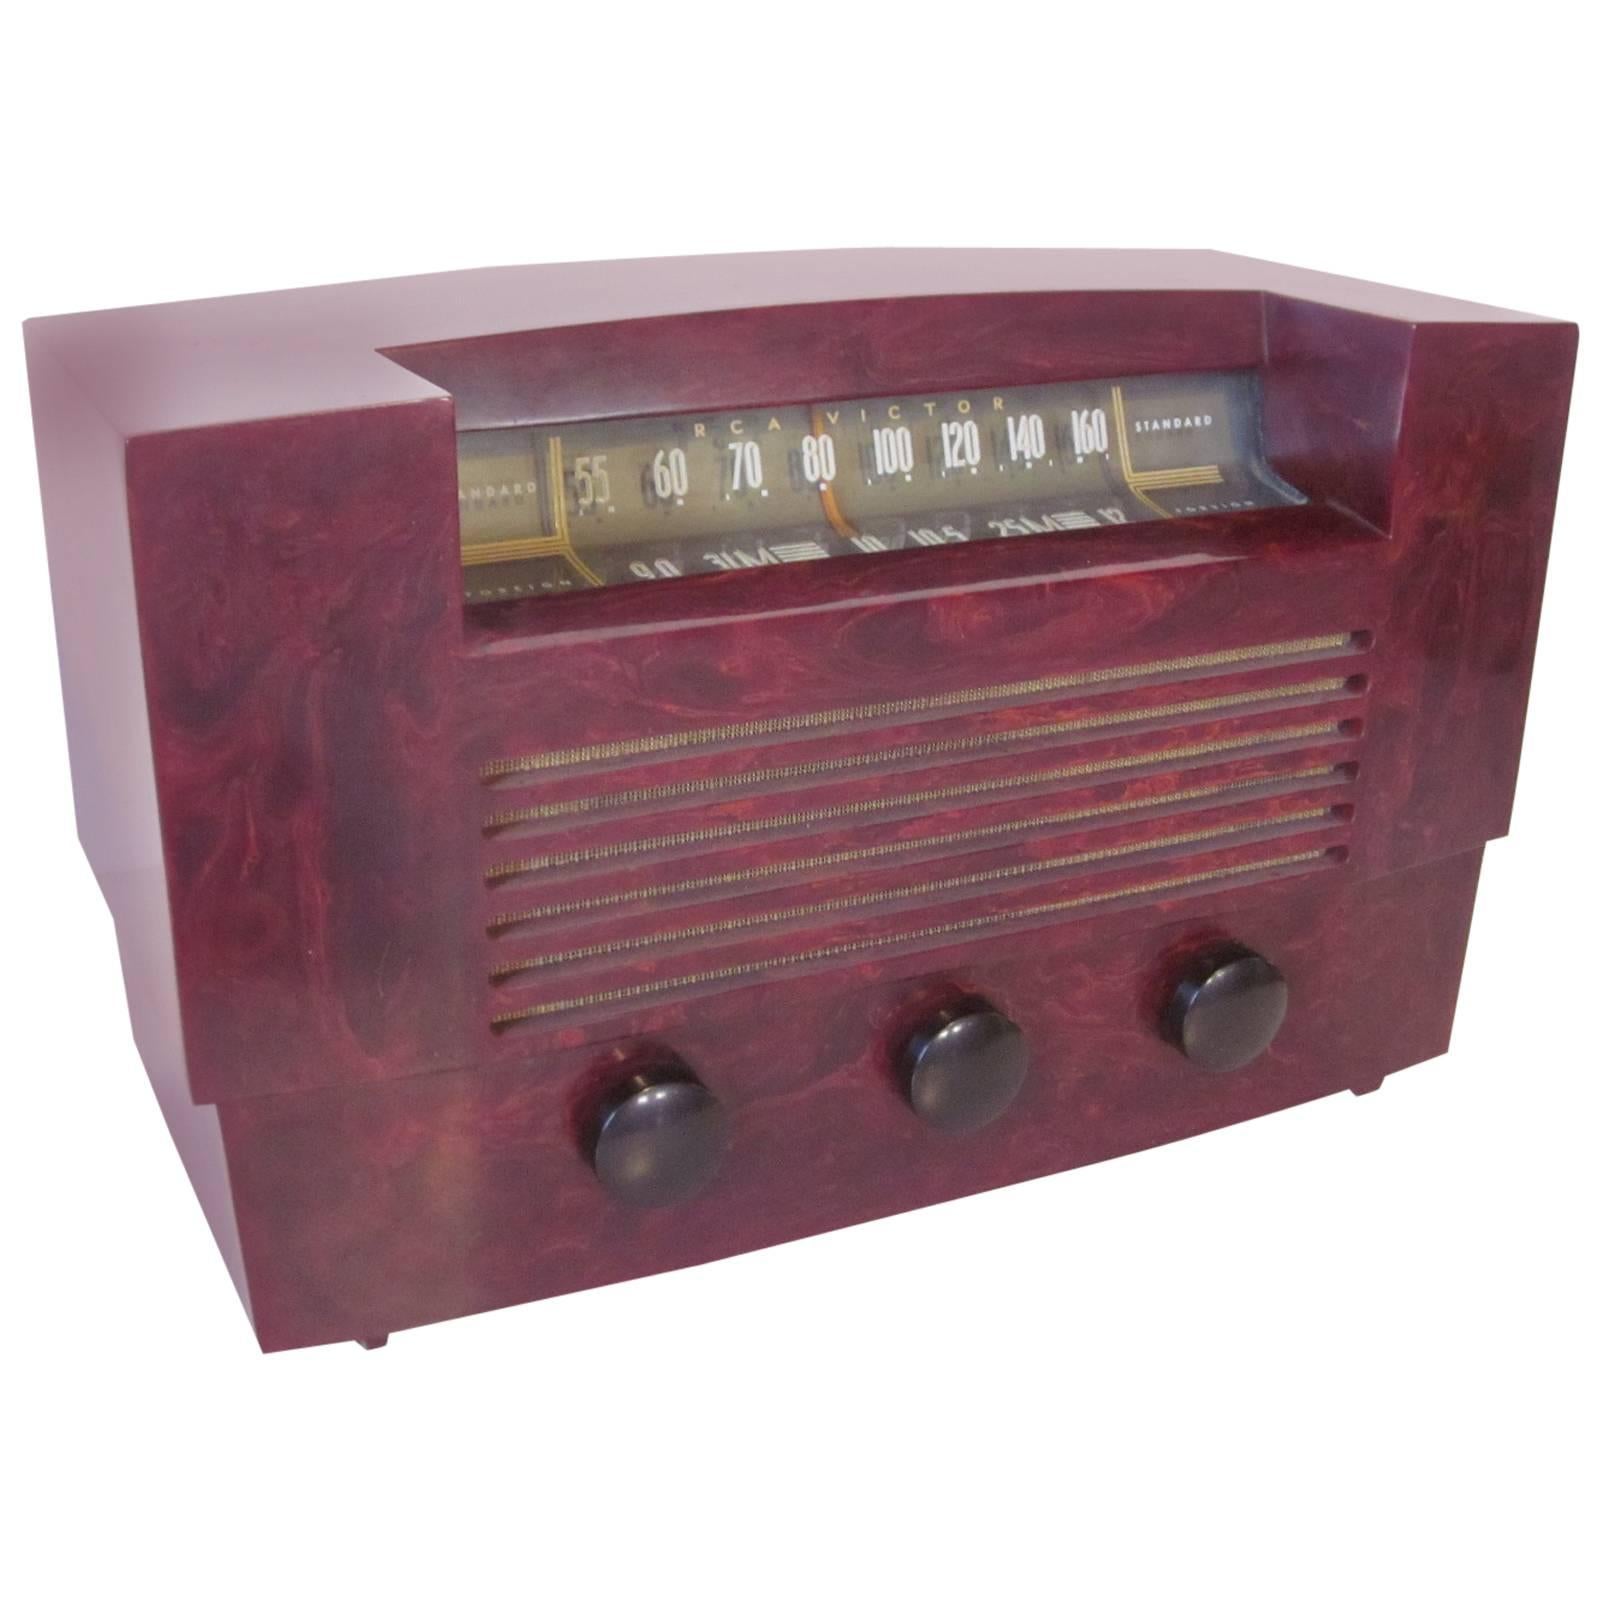 RCA Marbleized Catalin Radio Model 66X8